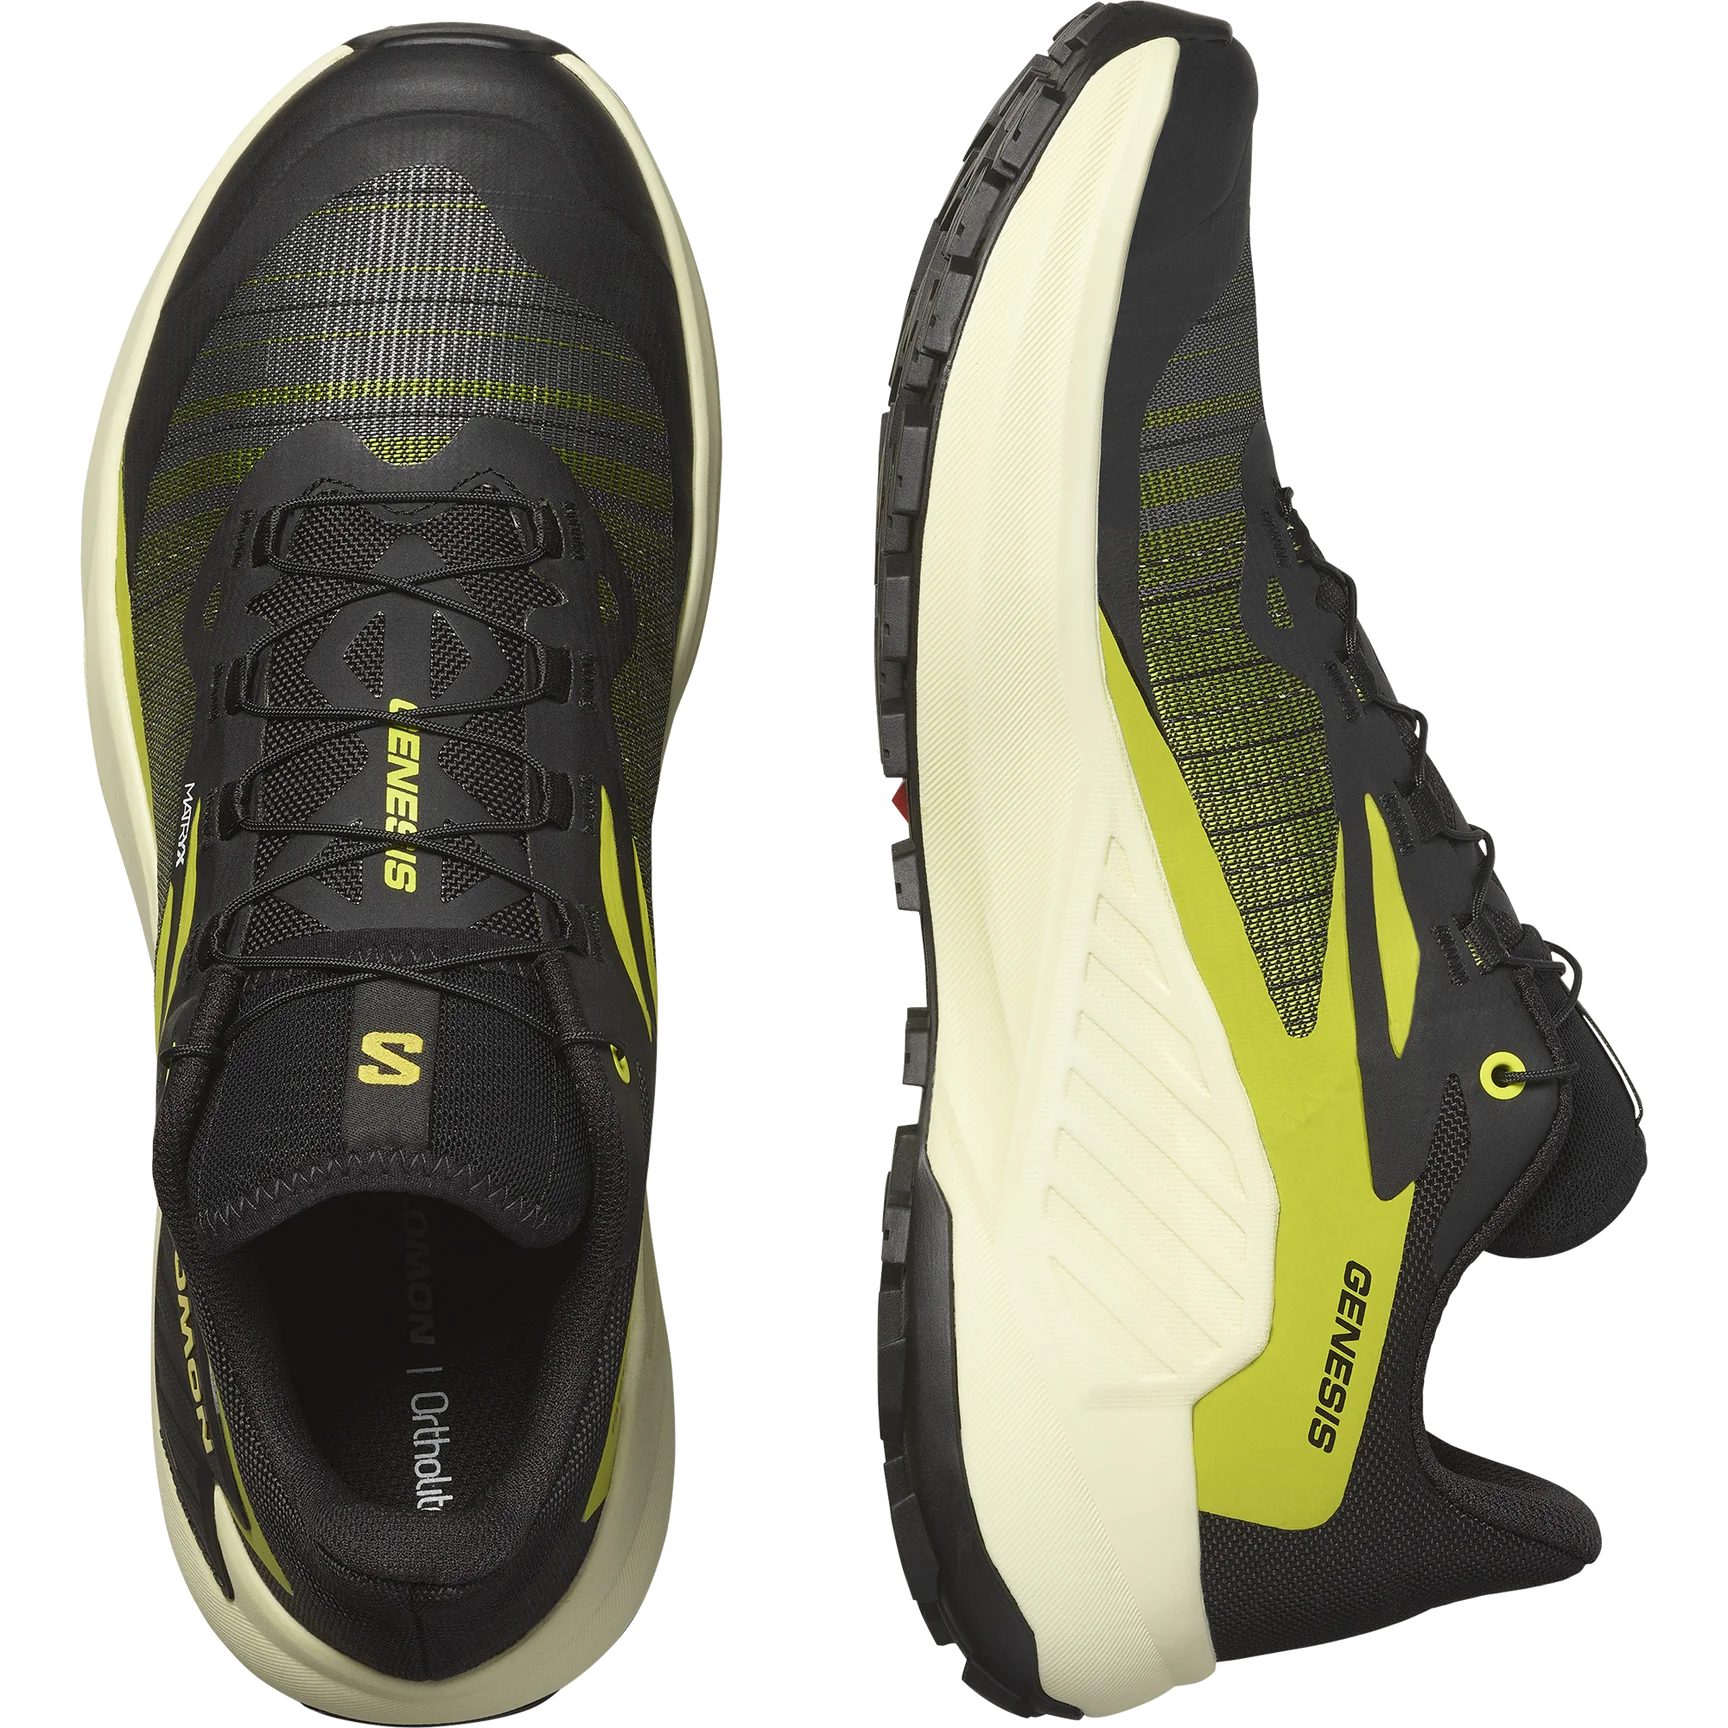 Salomon Genesis Shoe (Men's) - Black / Sulphur Spring / Transparent Yellow - Find Your Feet Australia Hobart Launceston Tasmania